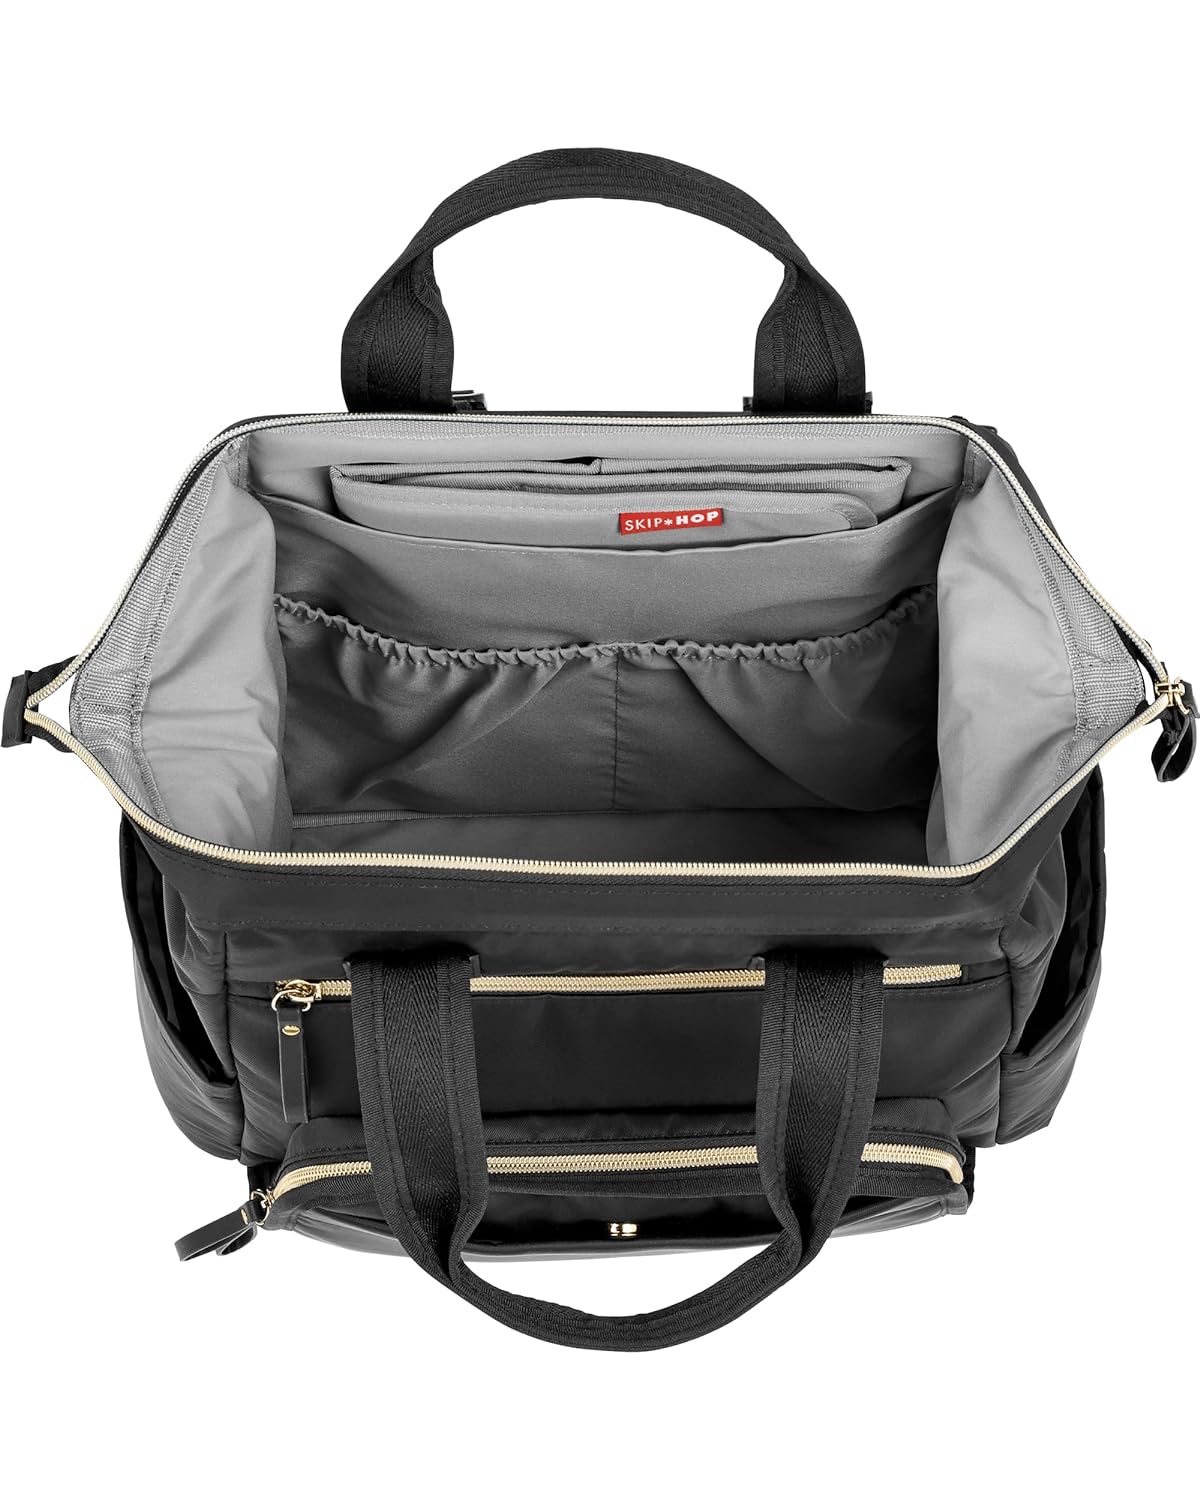 Skip Hop Diaper Bag Backpack, Mainframe Large Capacity, Black